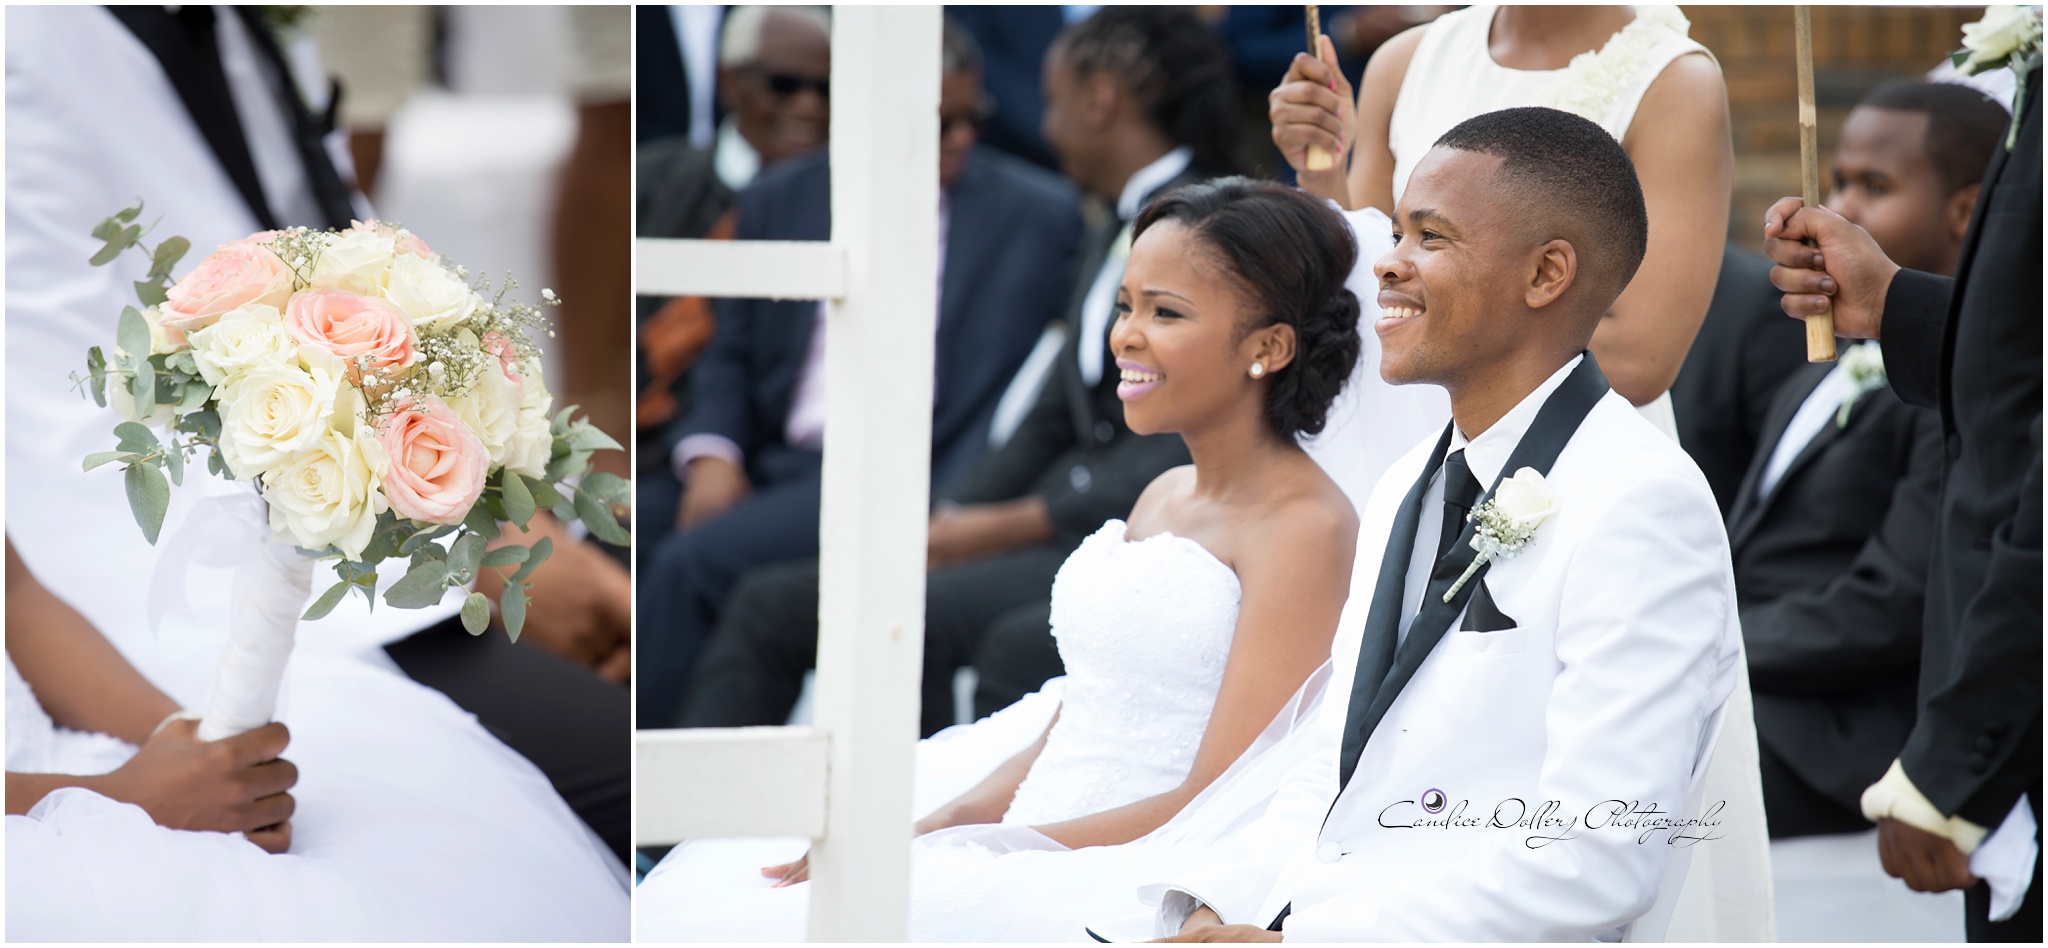 Asanda & Bonga's Wedding - Candice Dollery Photography_8206